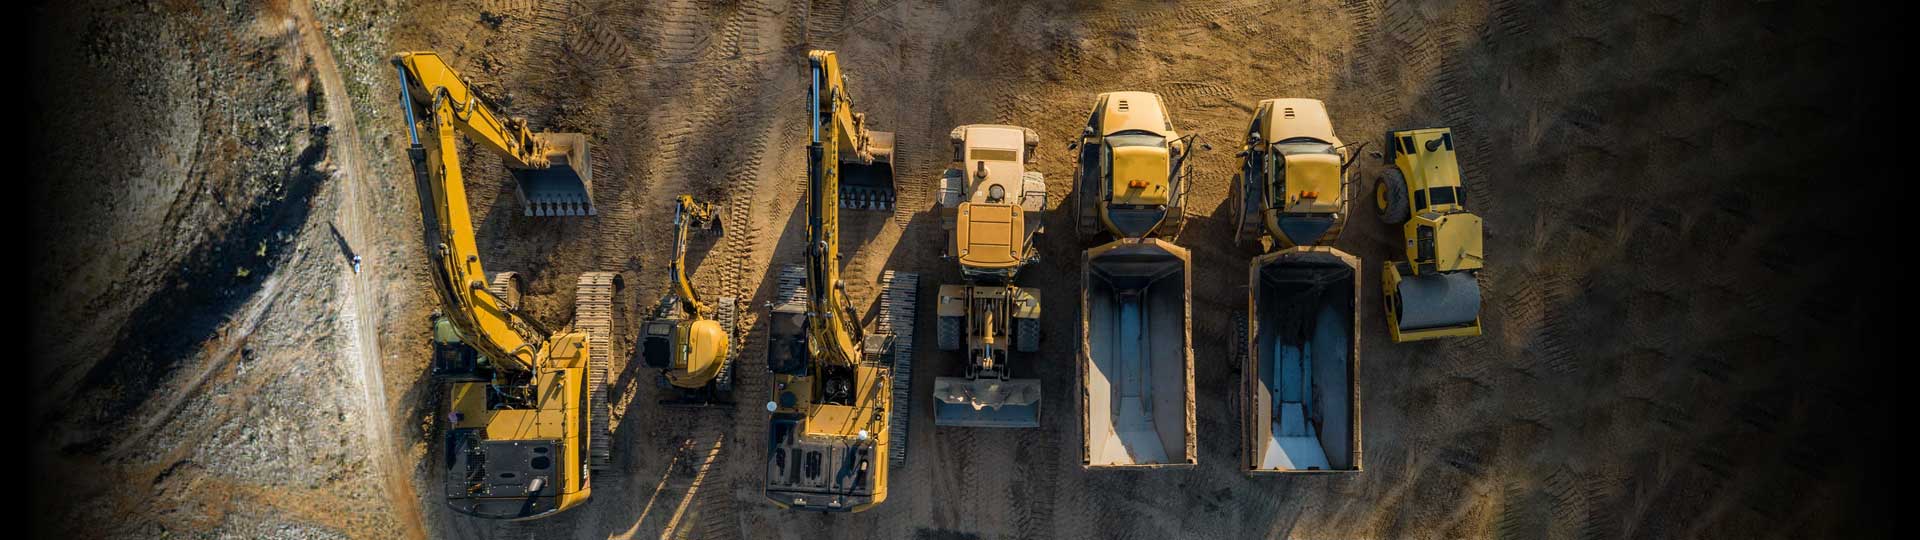 Three excavators, a backhoe, two trucks and a paving flattening machine